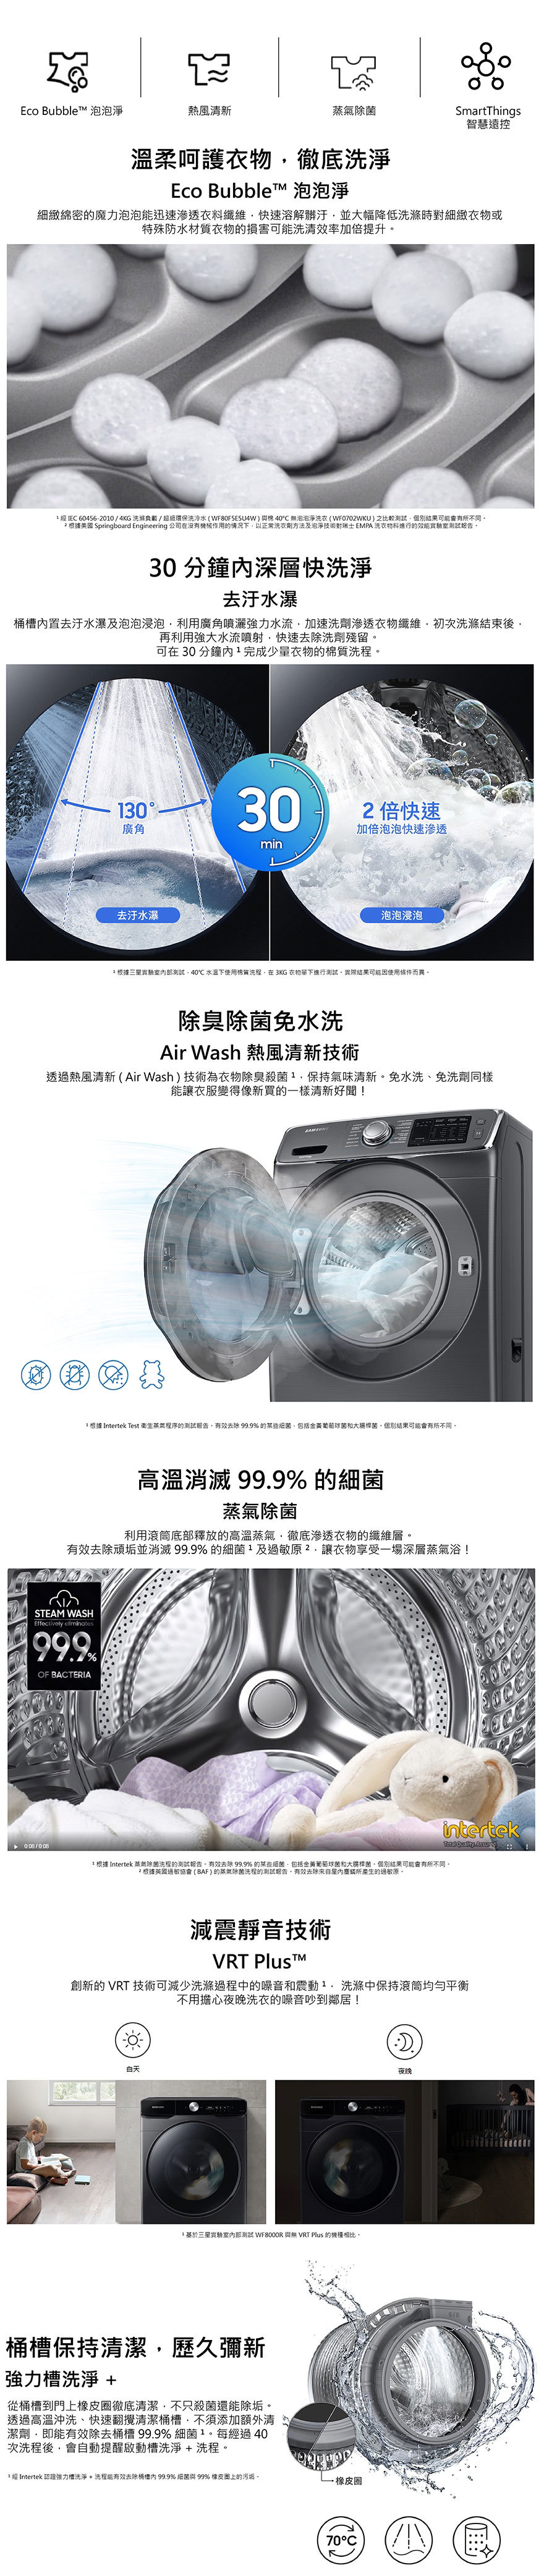 WD16T6000GW 洗衣機 16kg 滾筒 蒸洗脫烘 泡泡淨系列